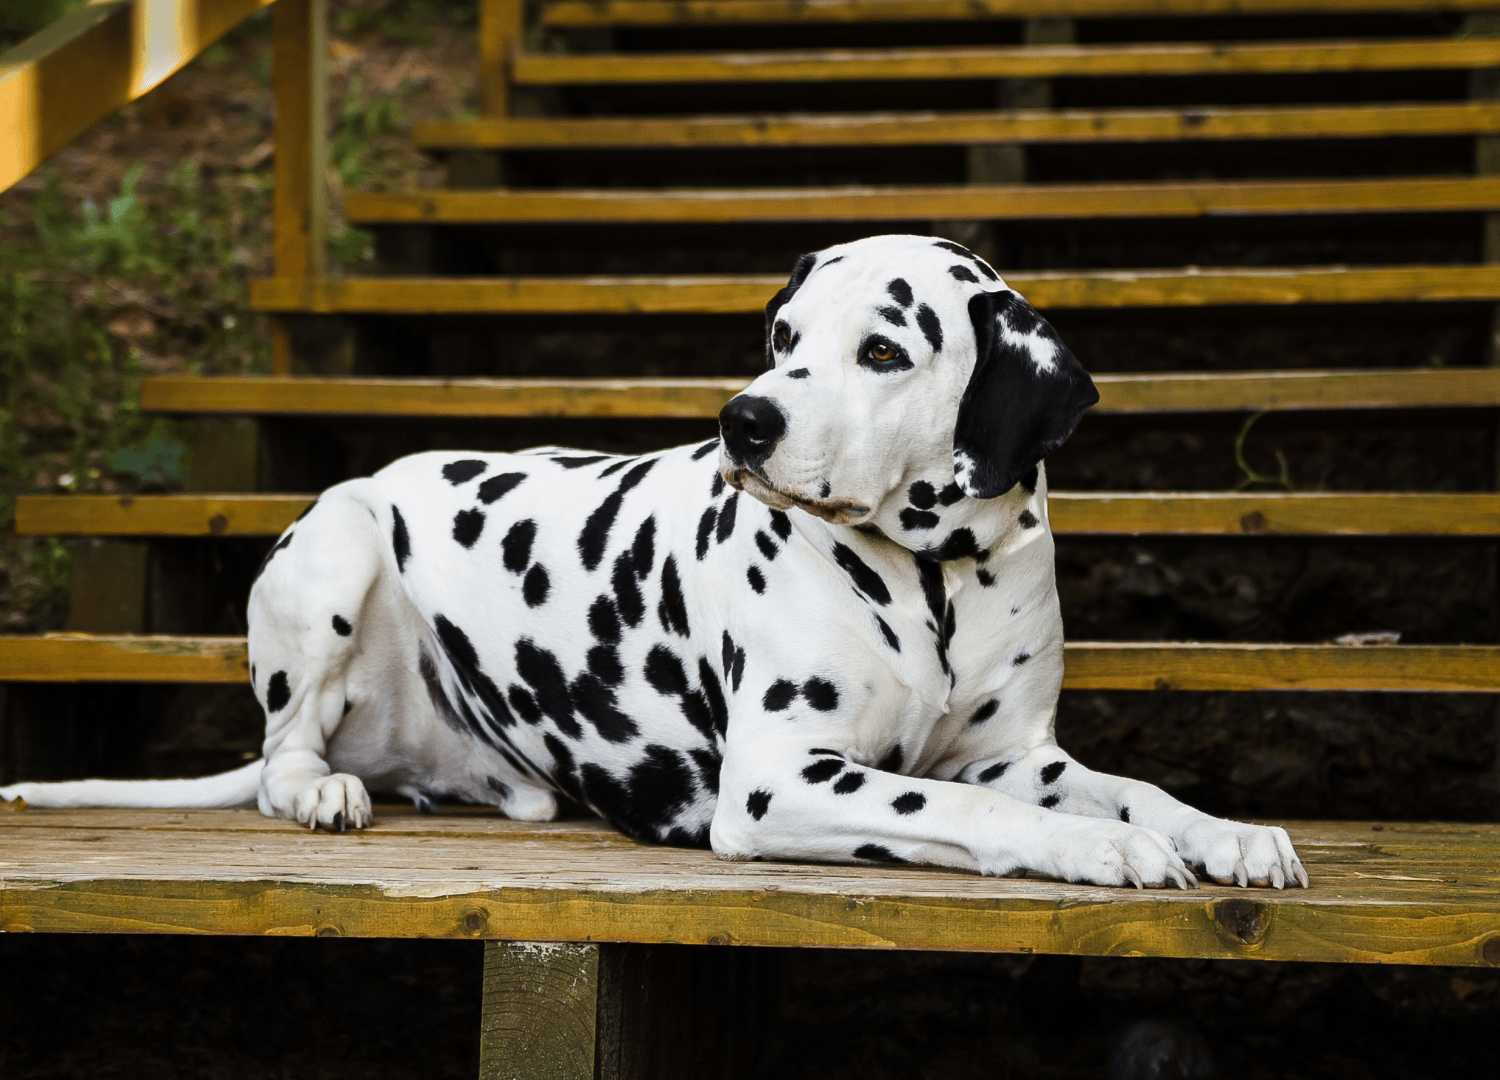 black and white dog breeds - Dalmatian